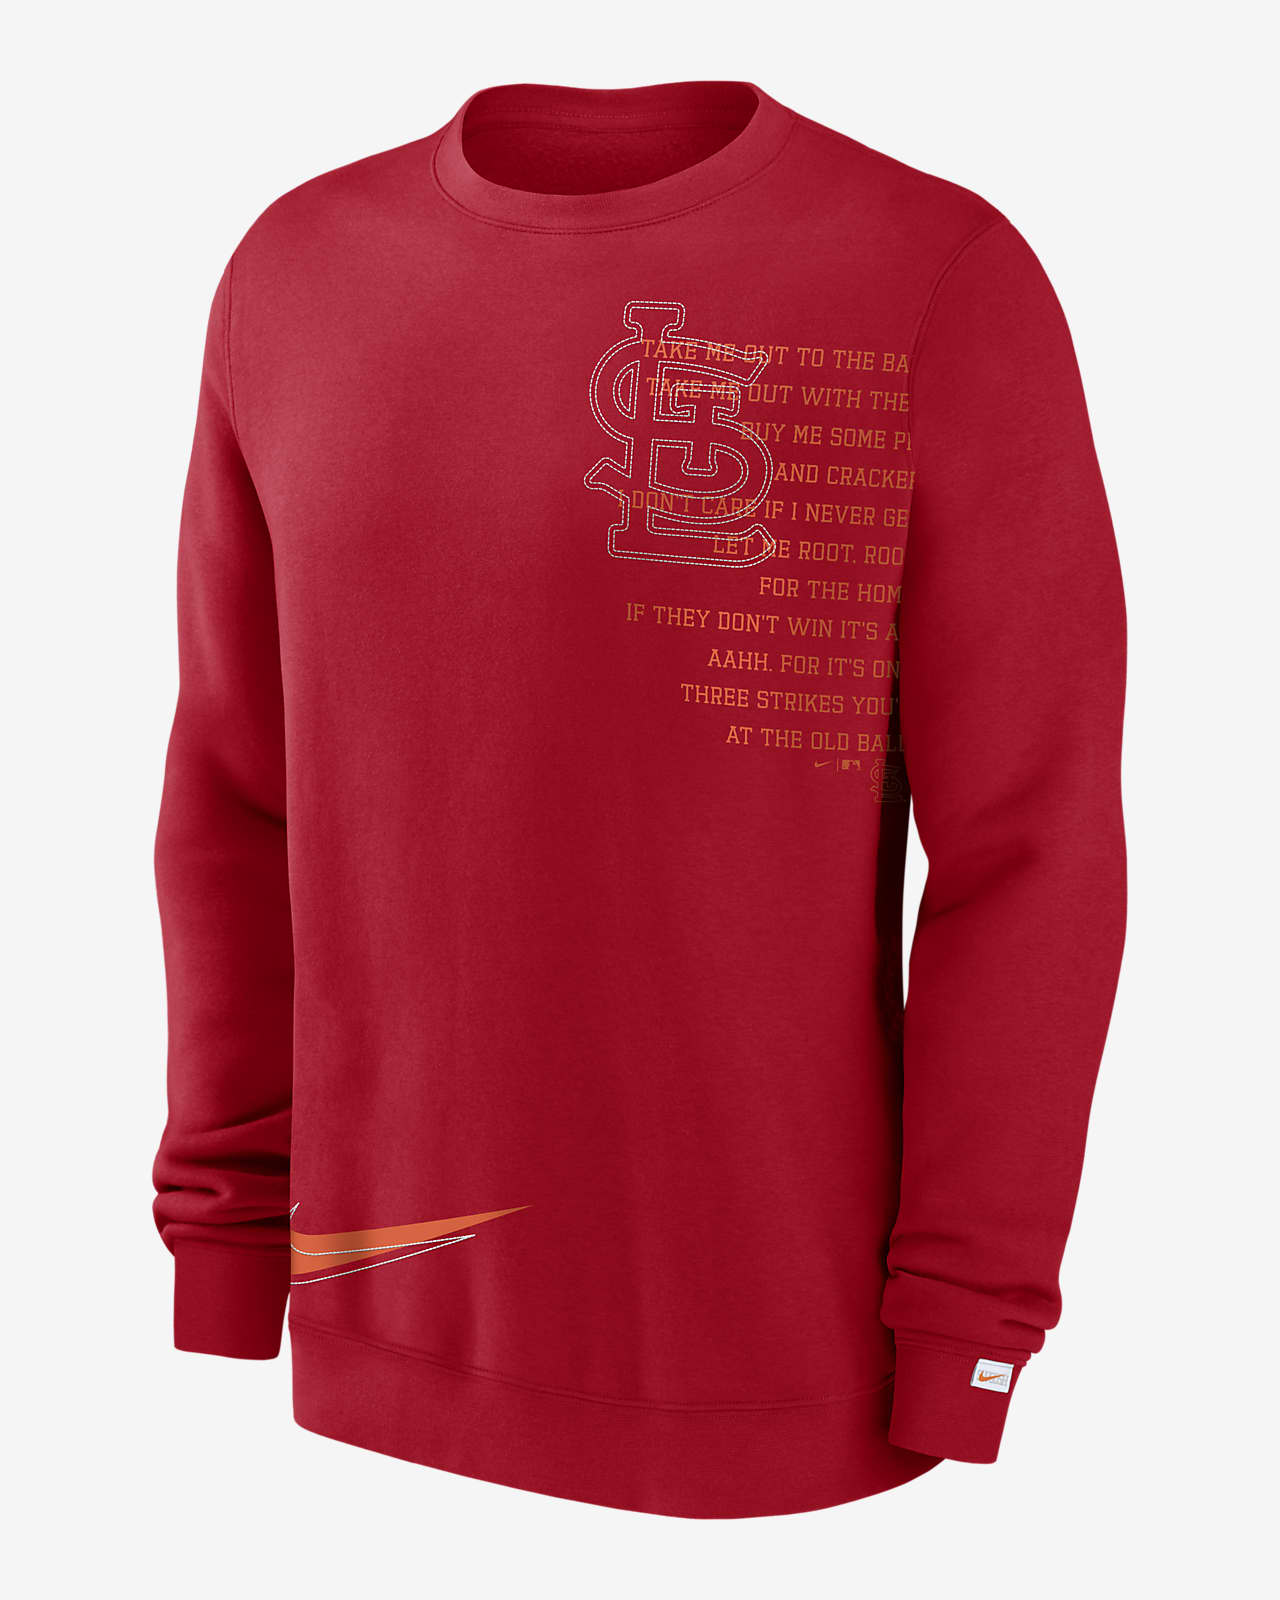 Vintage The Last Run Shirt, Cardinals Baseball Unisex Hoodie Crewneck